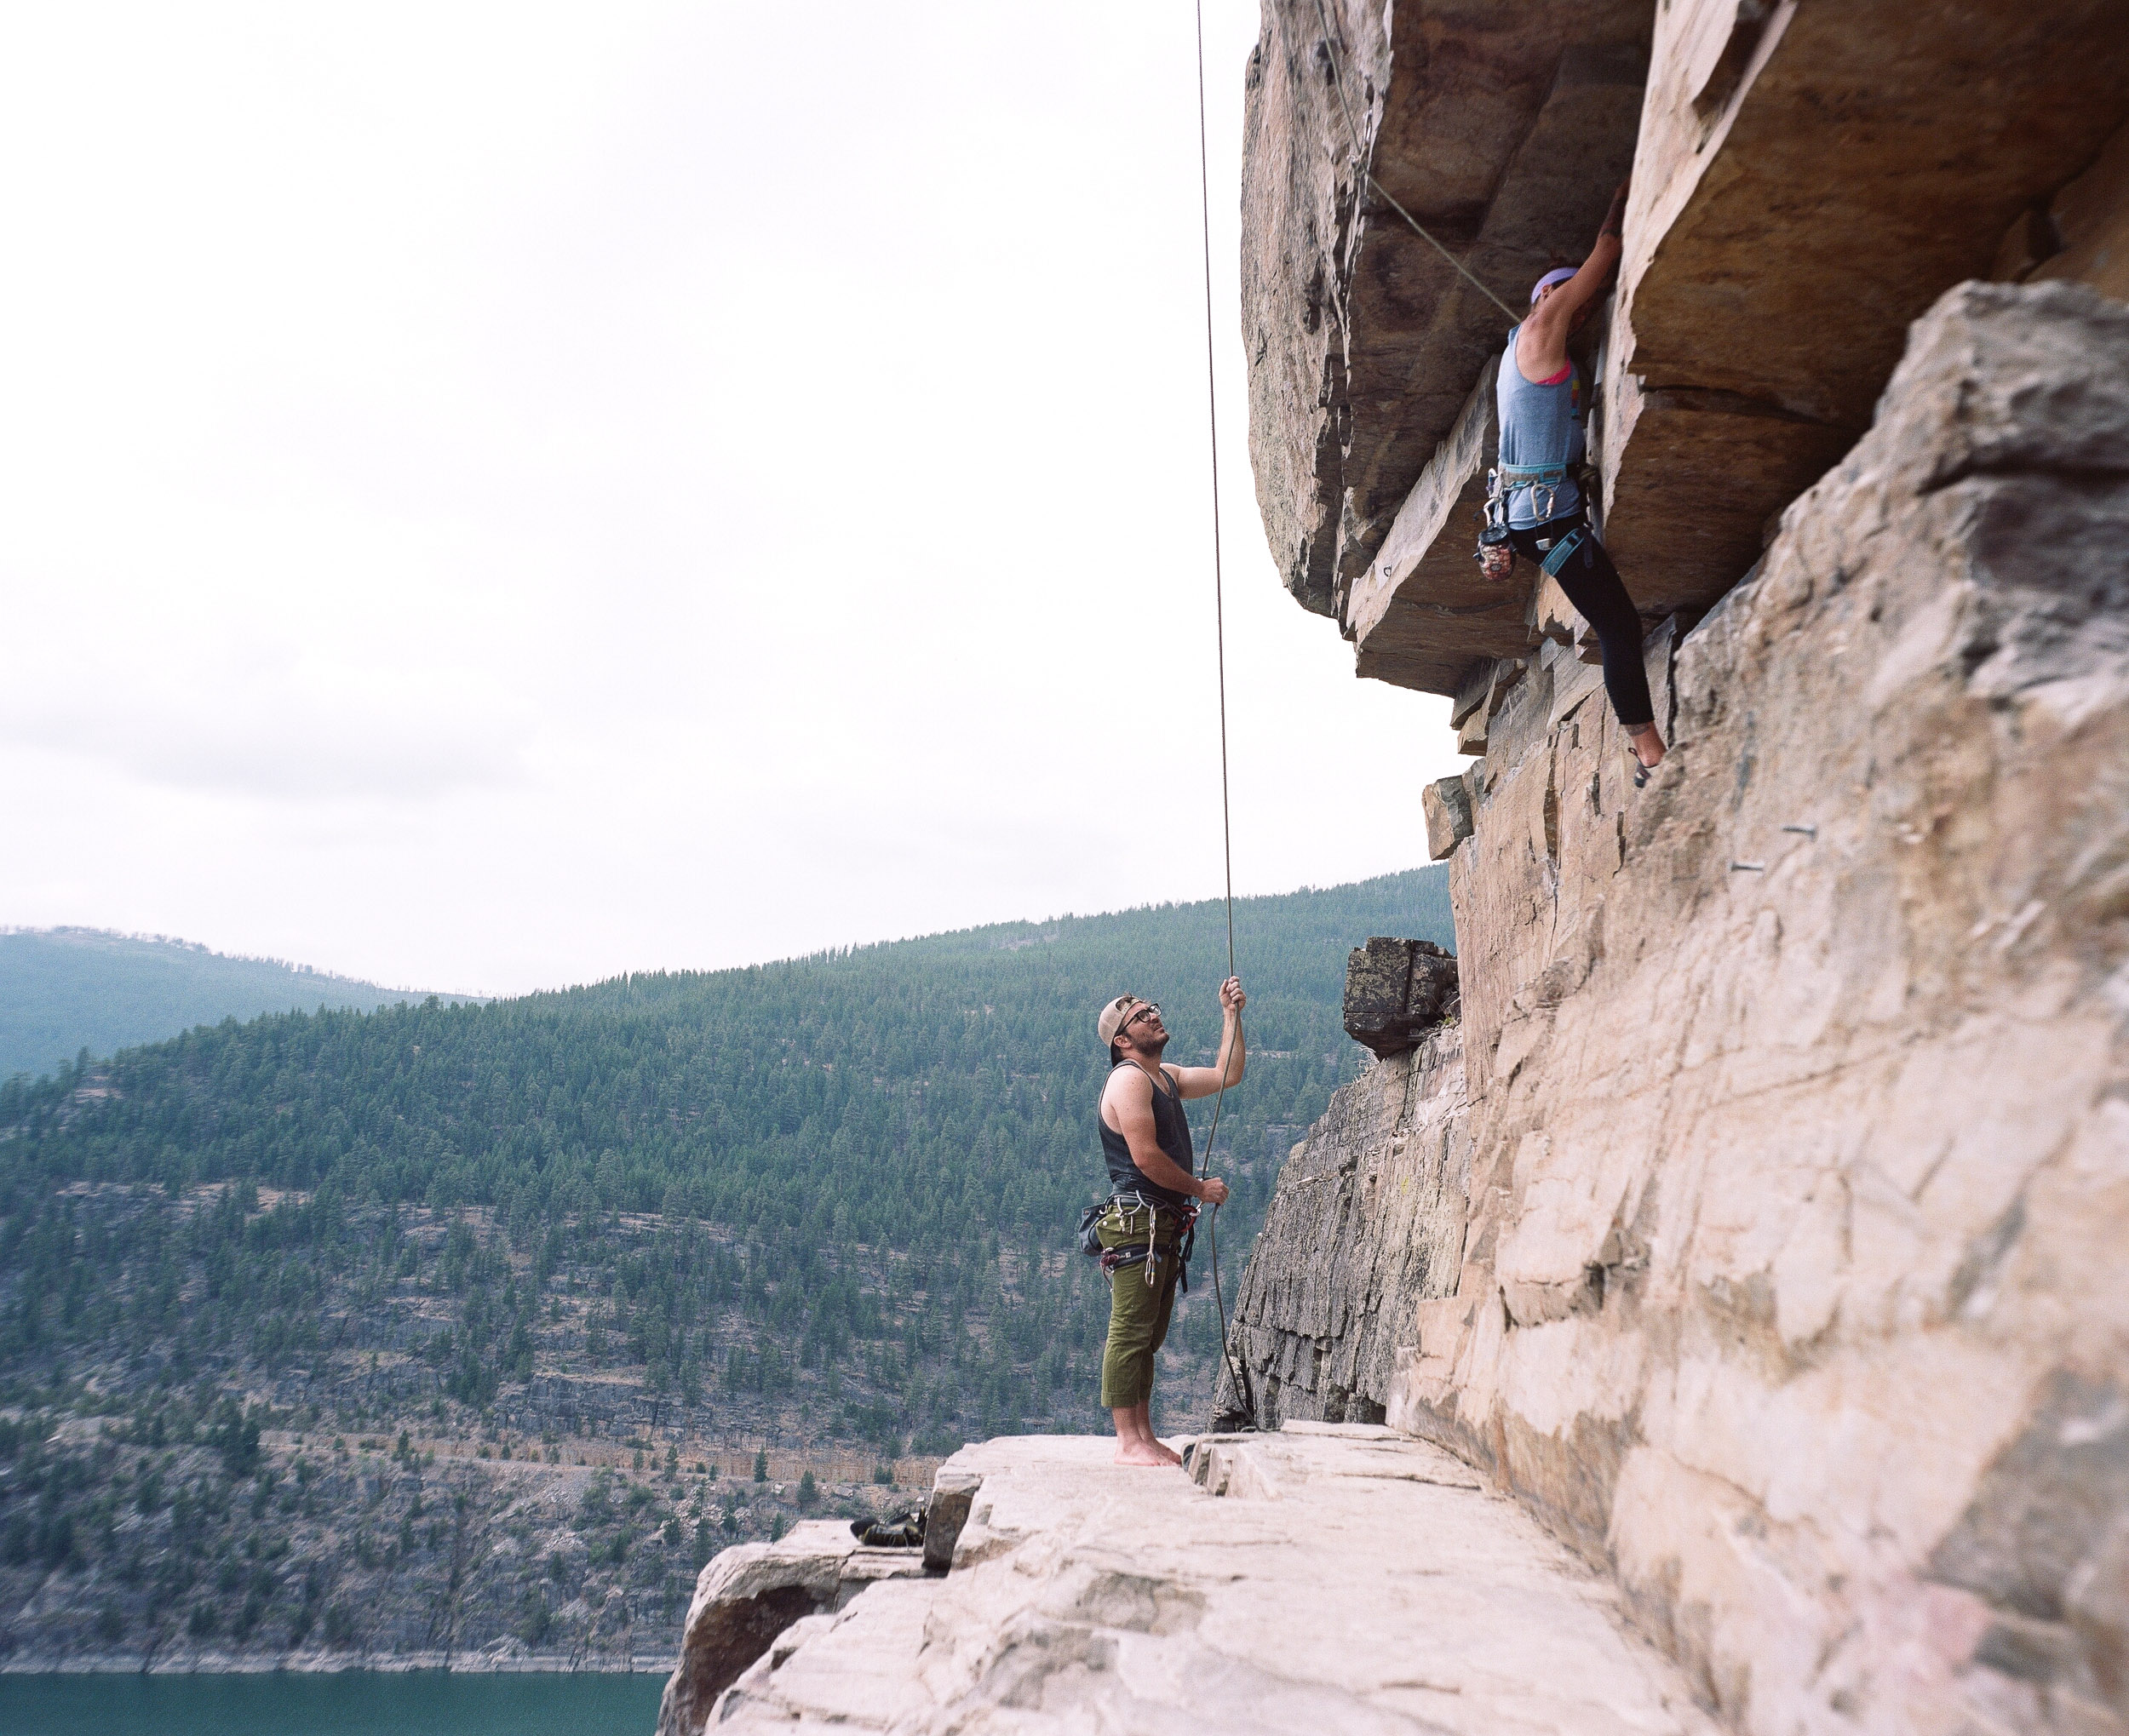 Rock climbers on a ledge over lake Koocanusa